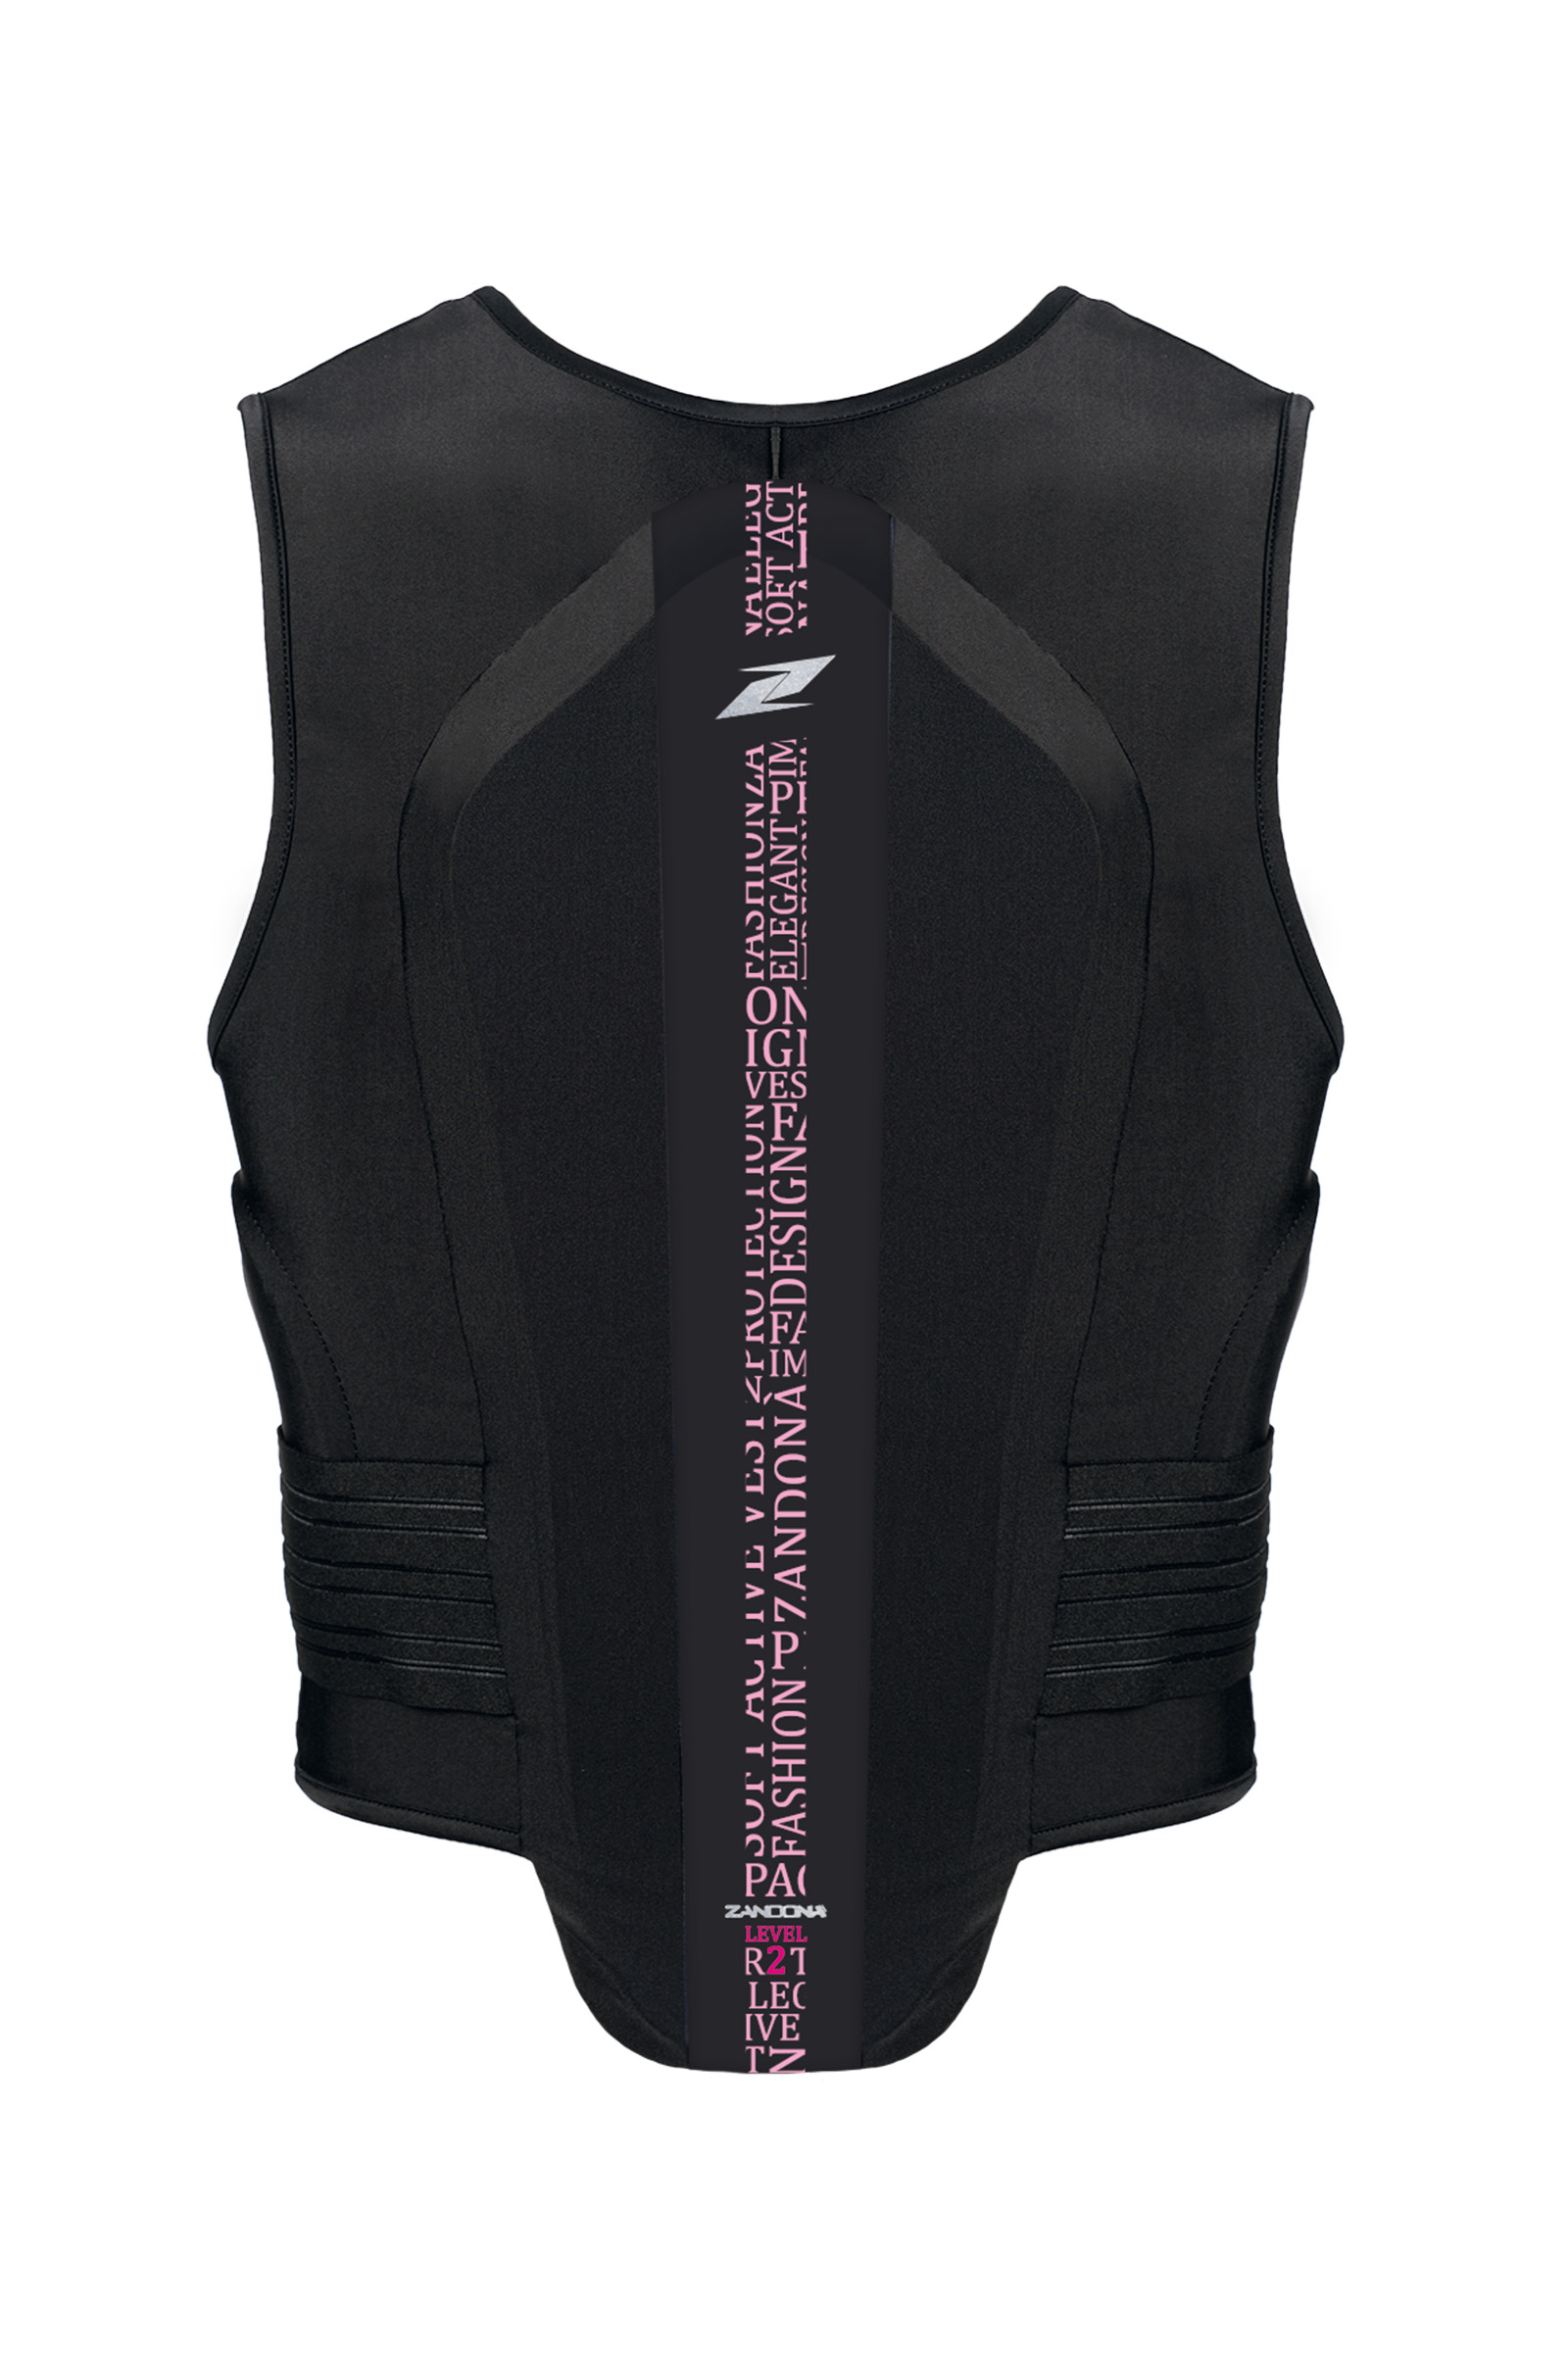 Zandona Protector Pro Buy Vest x6 Soft Back (158-167cm)